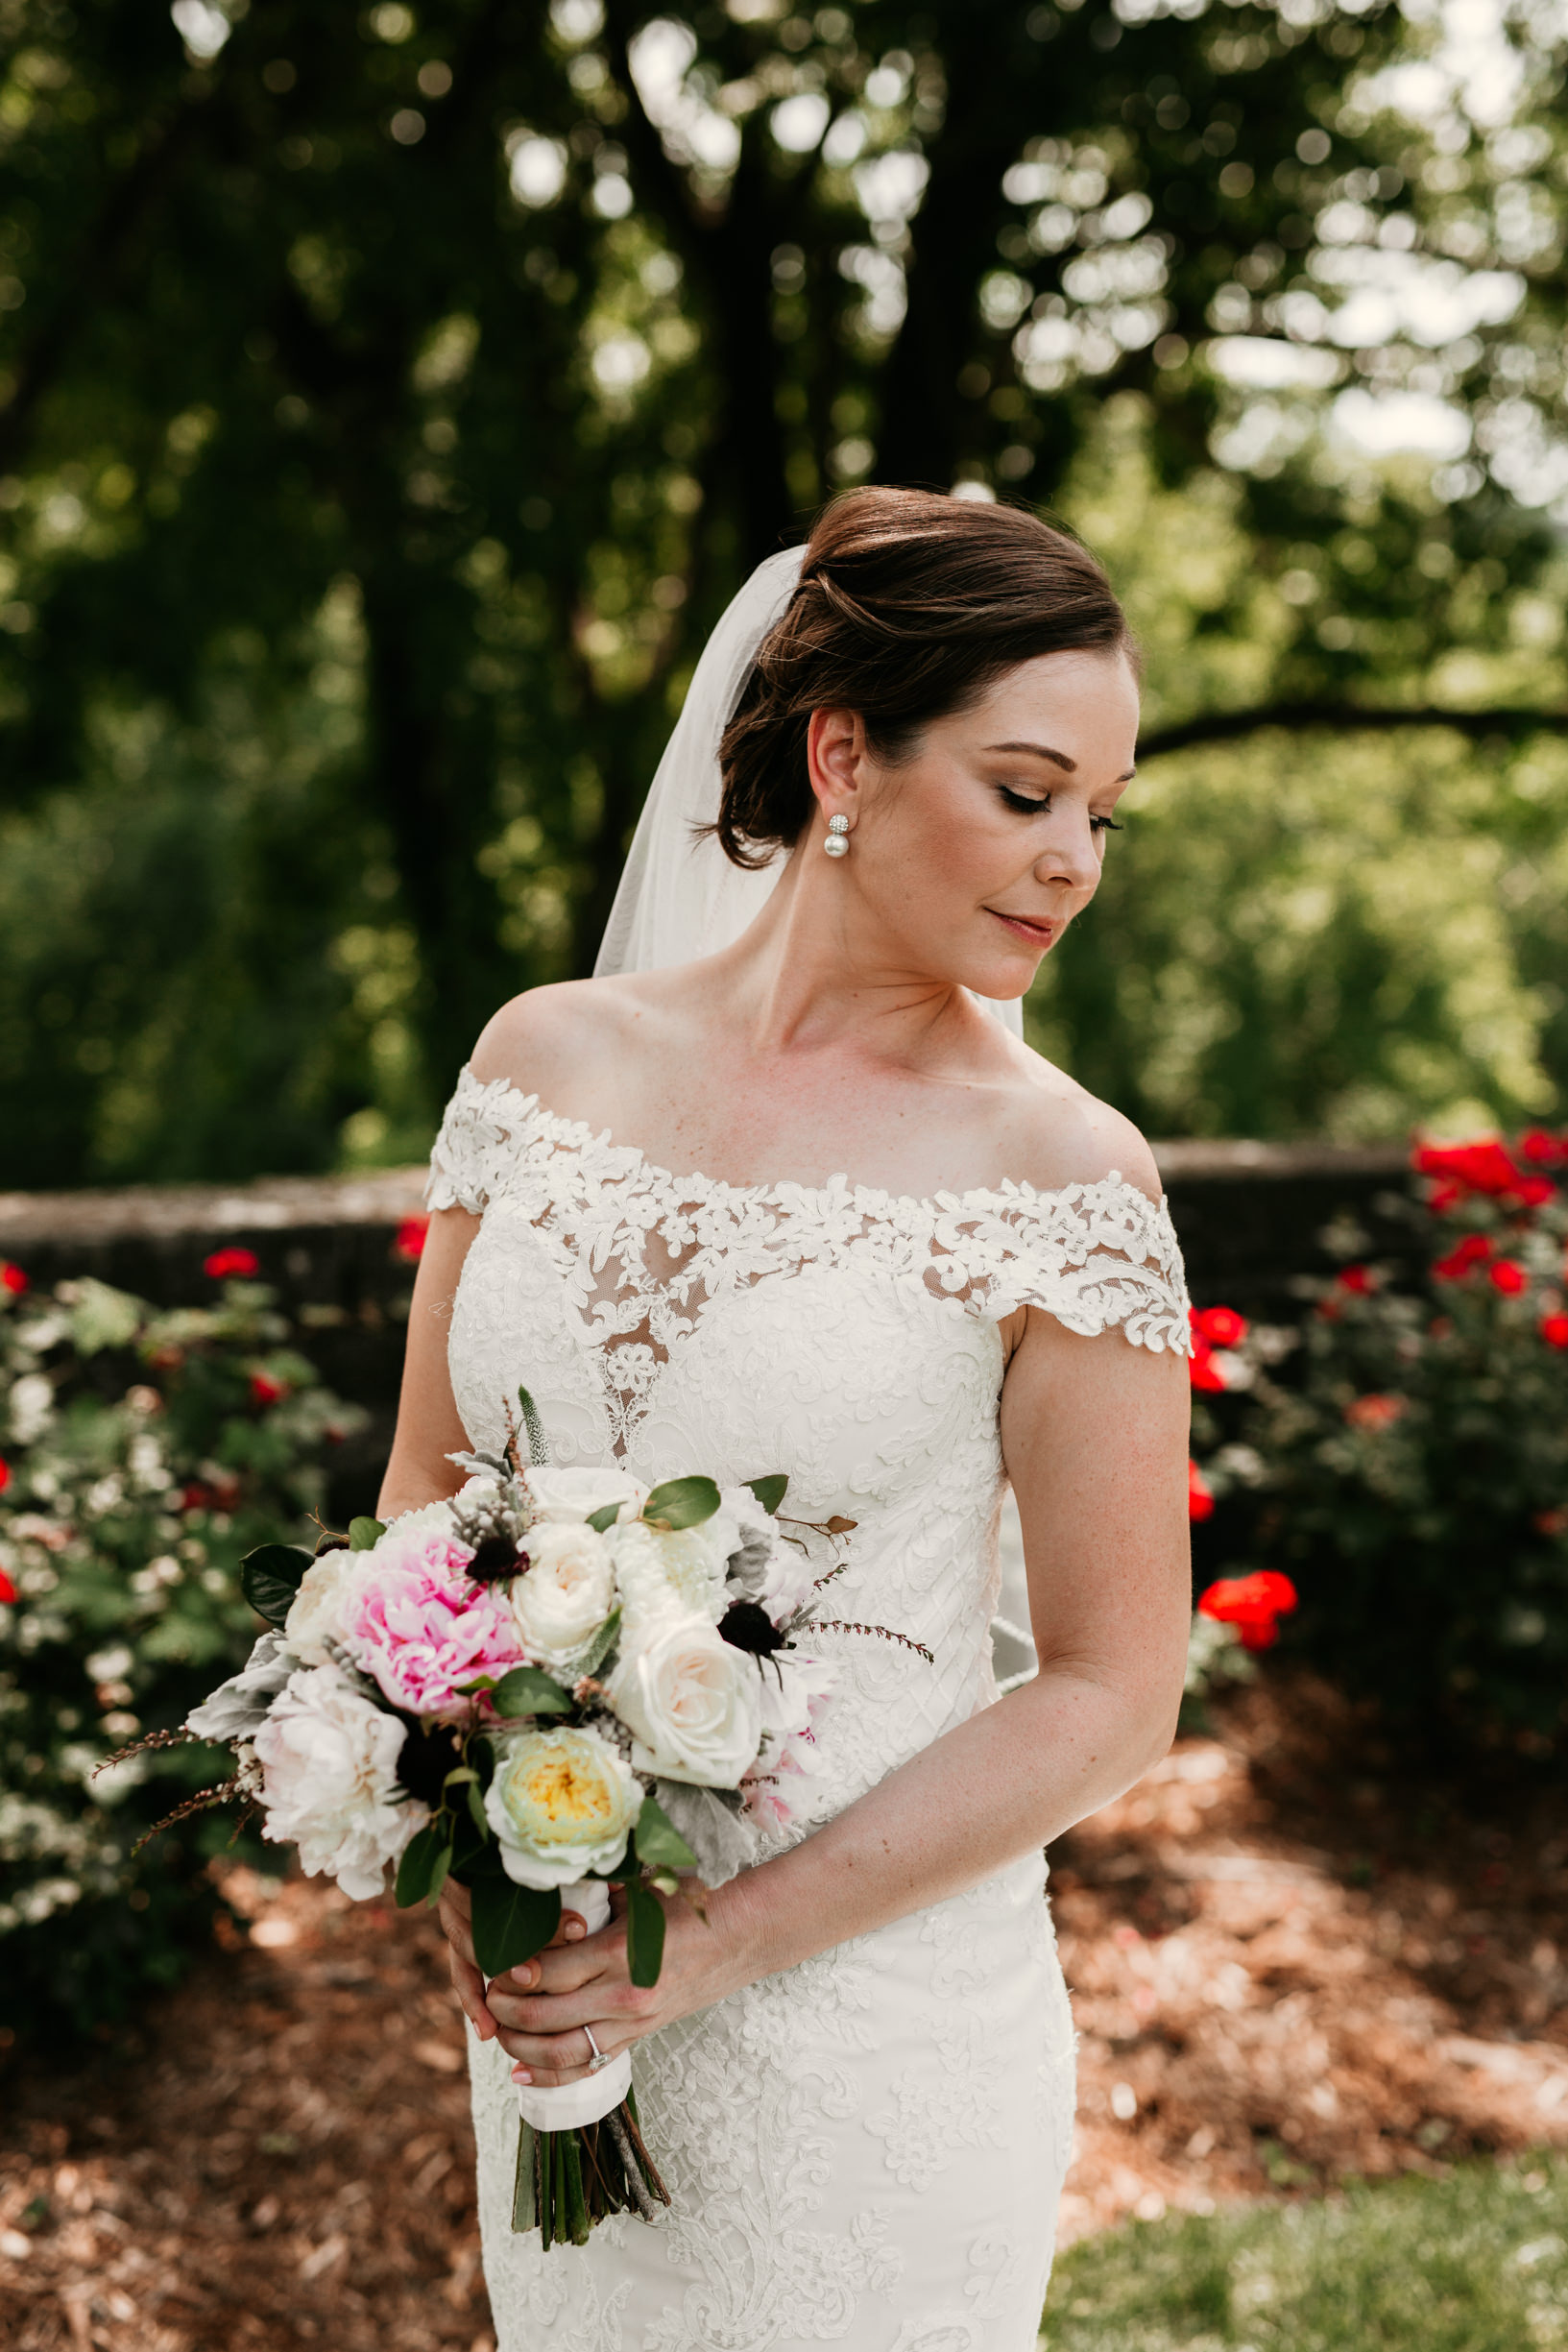 Crystal Ludwick Photo Louisvile Kentucky Louisville Photographer Wedding Photographer 2018  (28 of 164).jpg